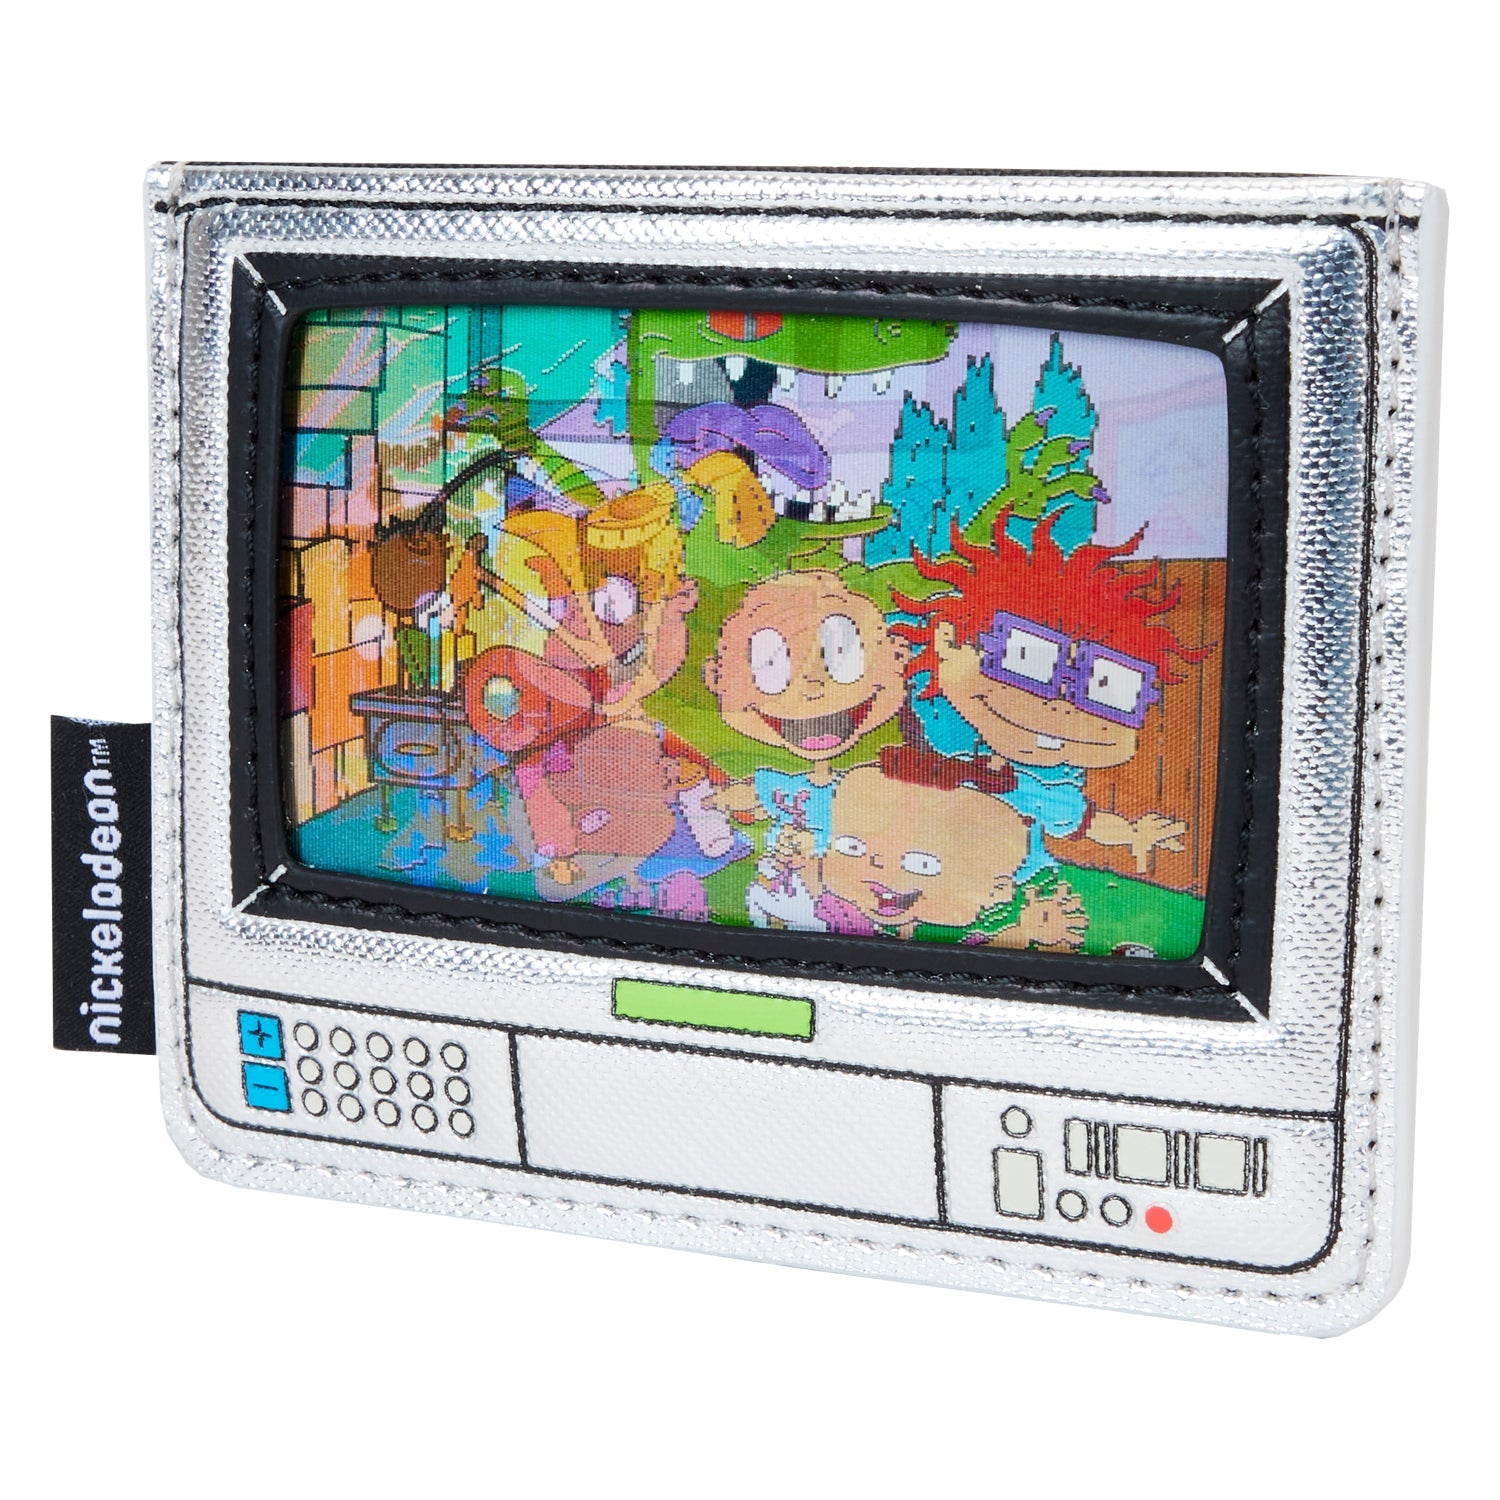 Loungefly x Nickelodeon Retro TV Cardholder - GeekCore